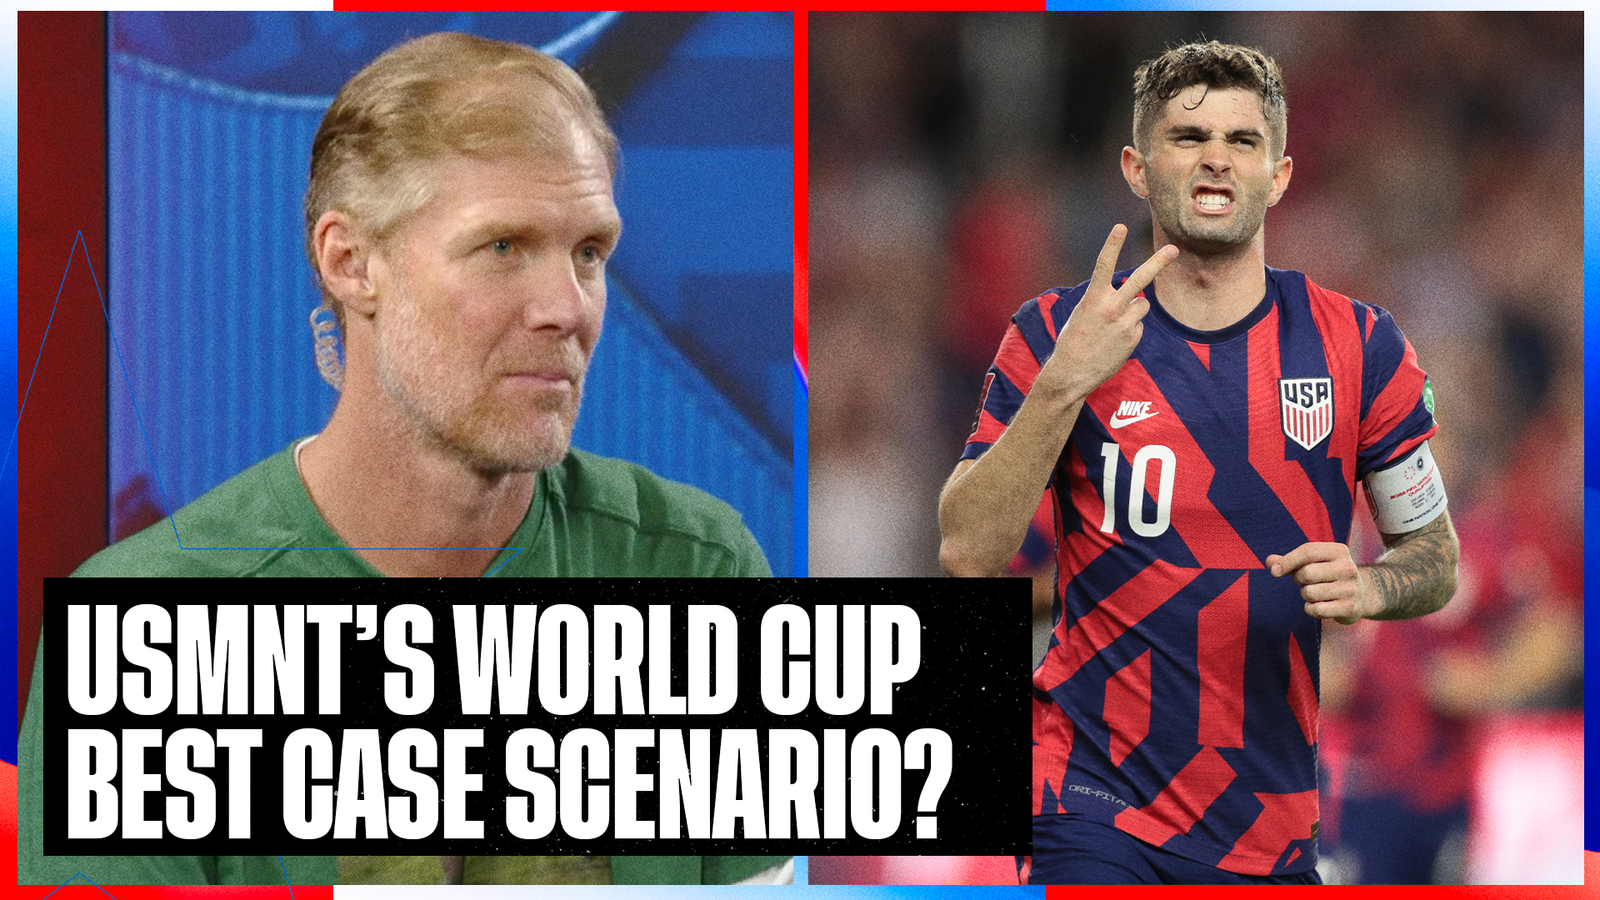 FIFA World Cup: What is USMNT's best case scenario?